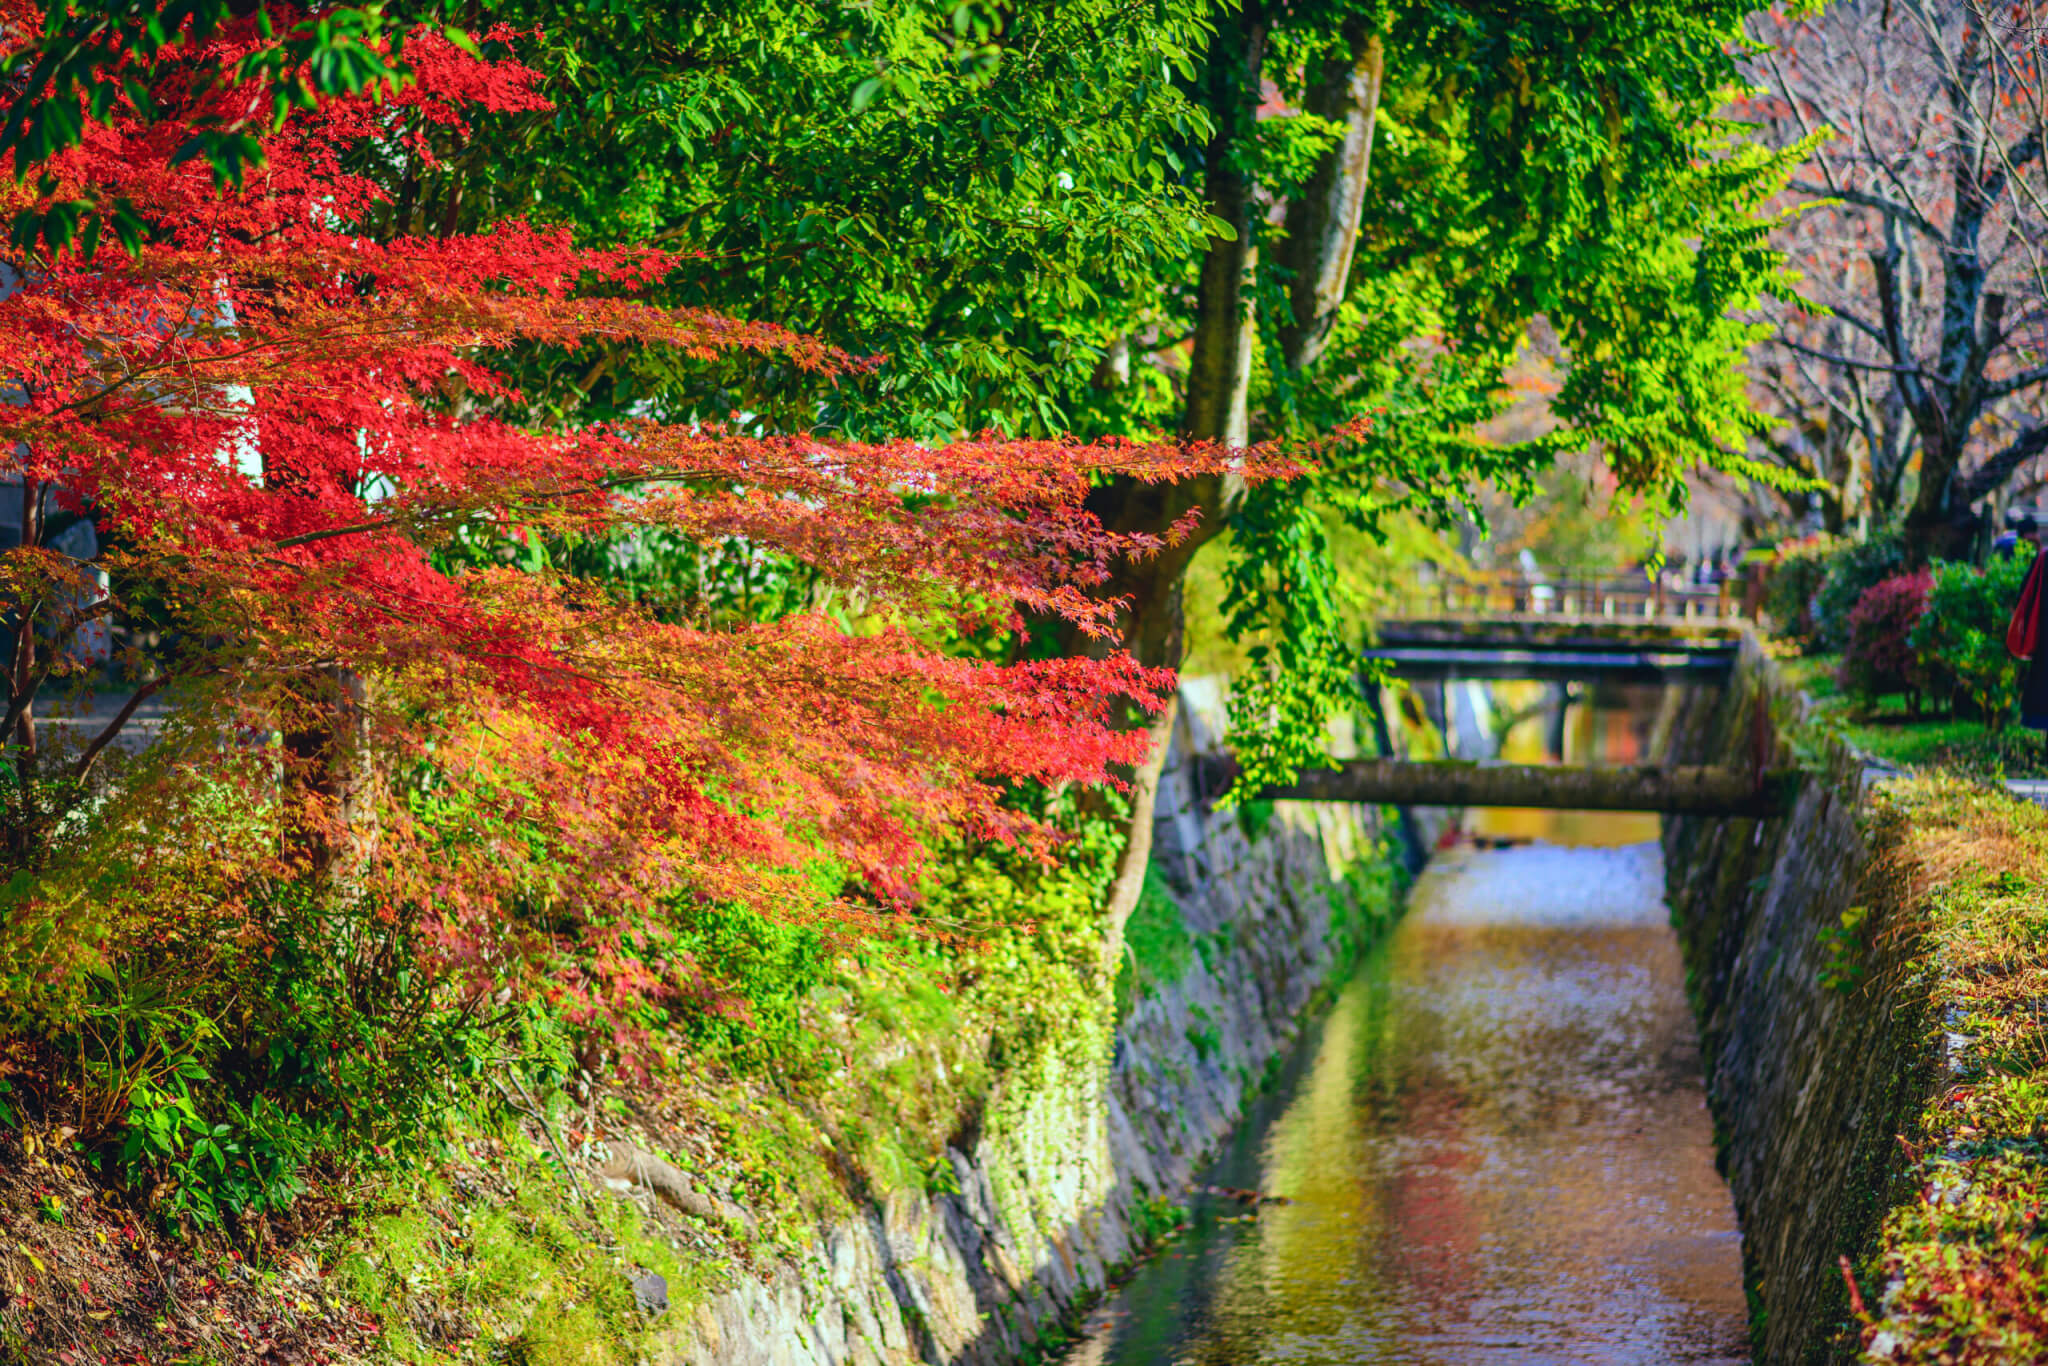 Philospher's Path in Kyoto, Japan